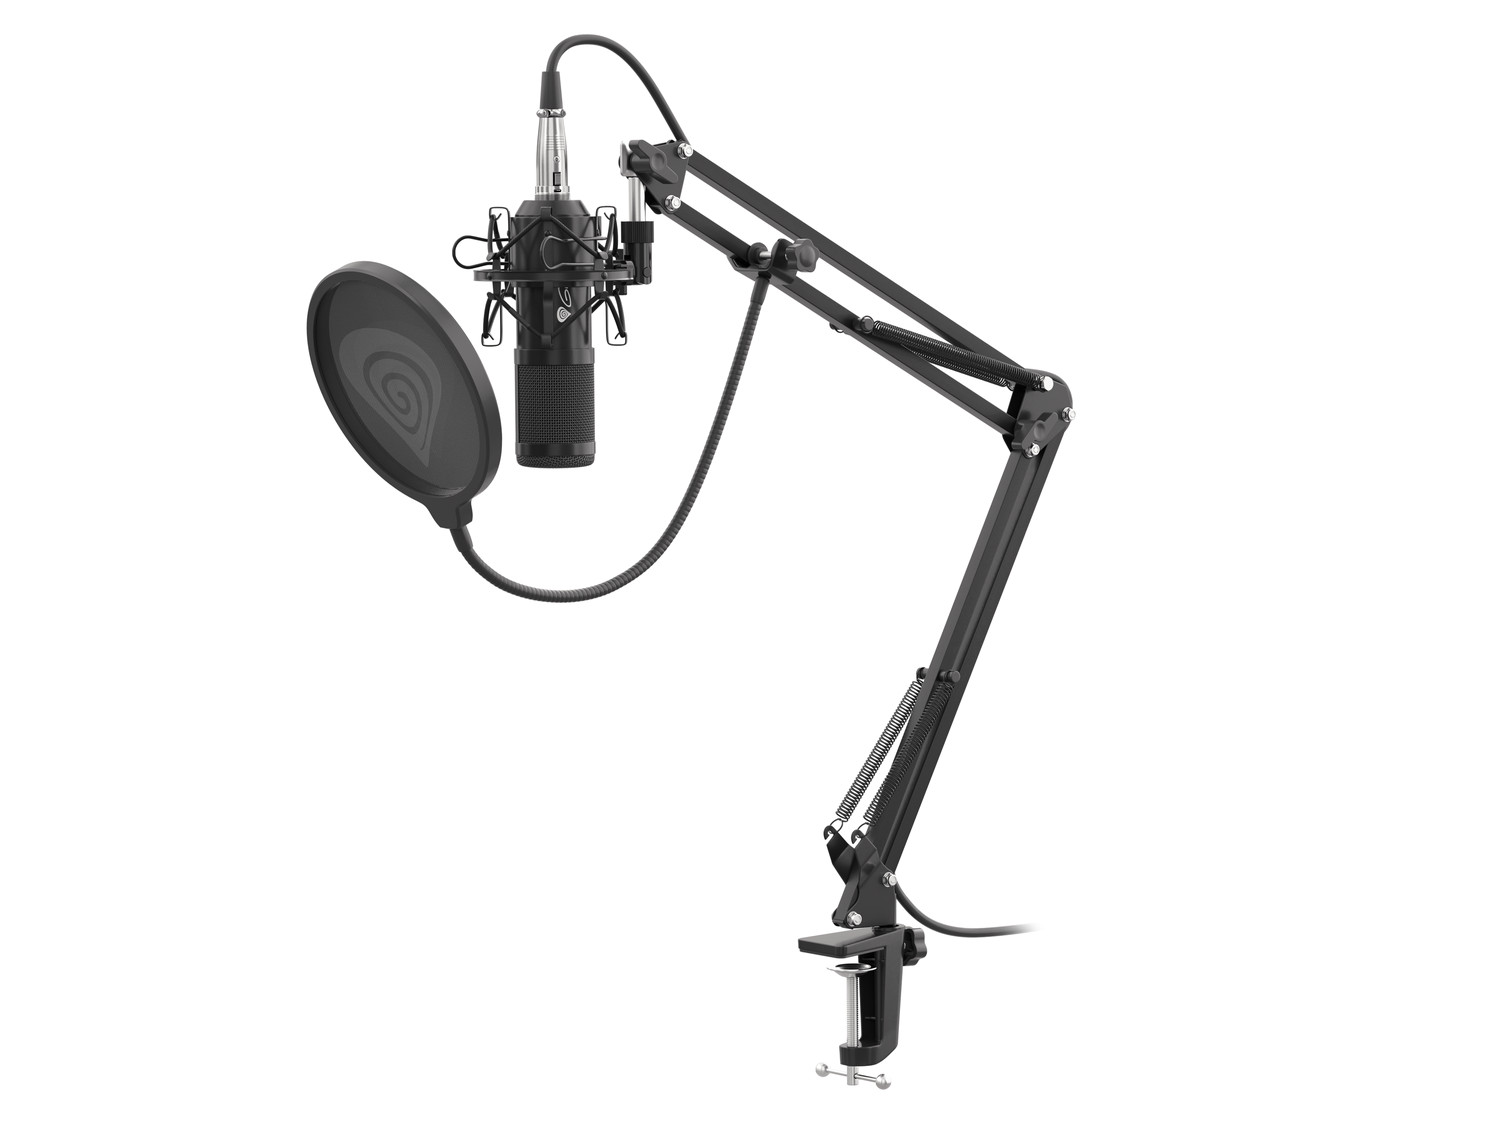 Natec Genesis microphone Radium 300 studio XLR arm popfilter NGM-1695